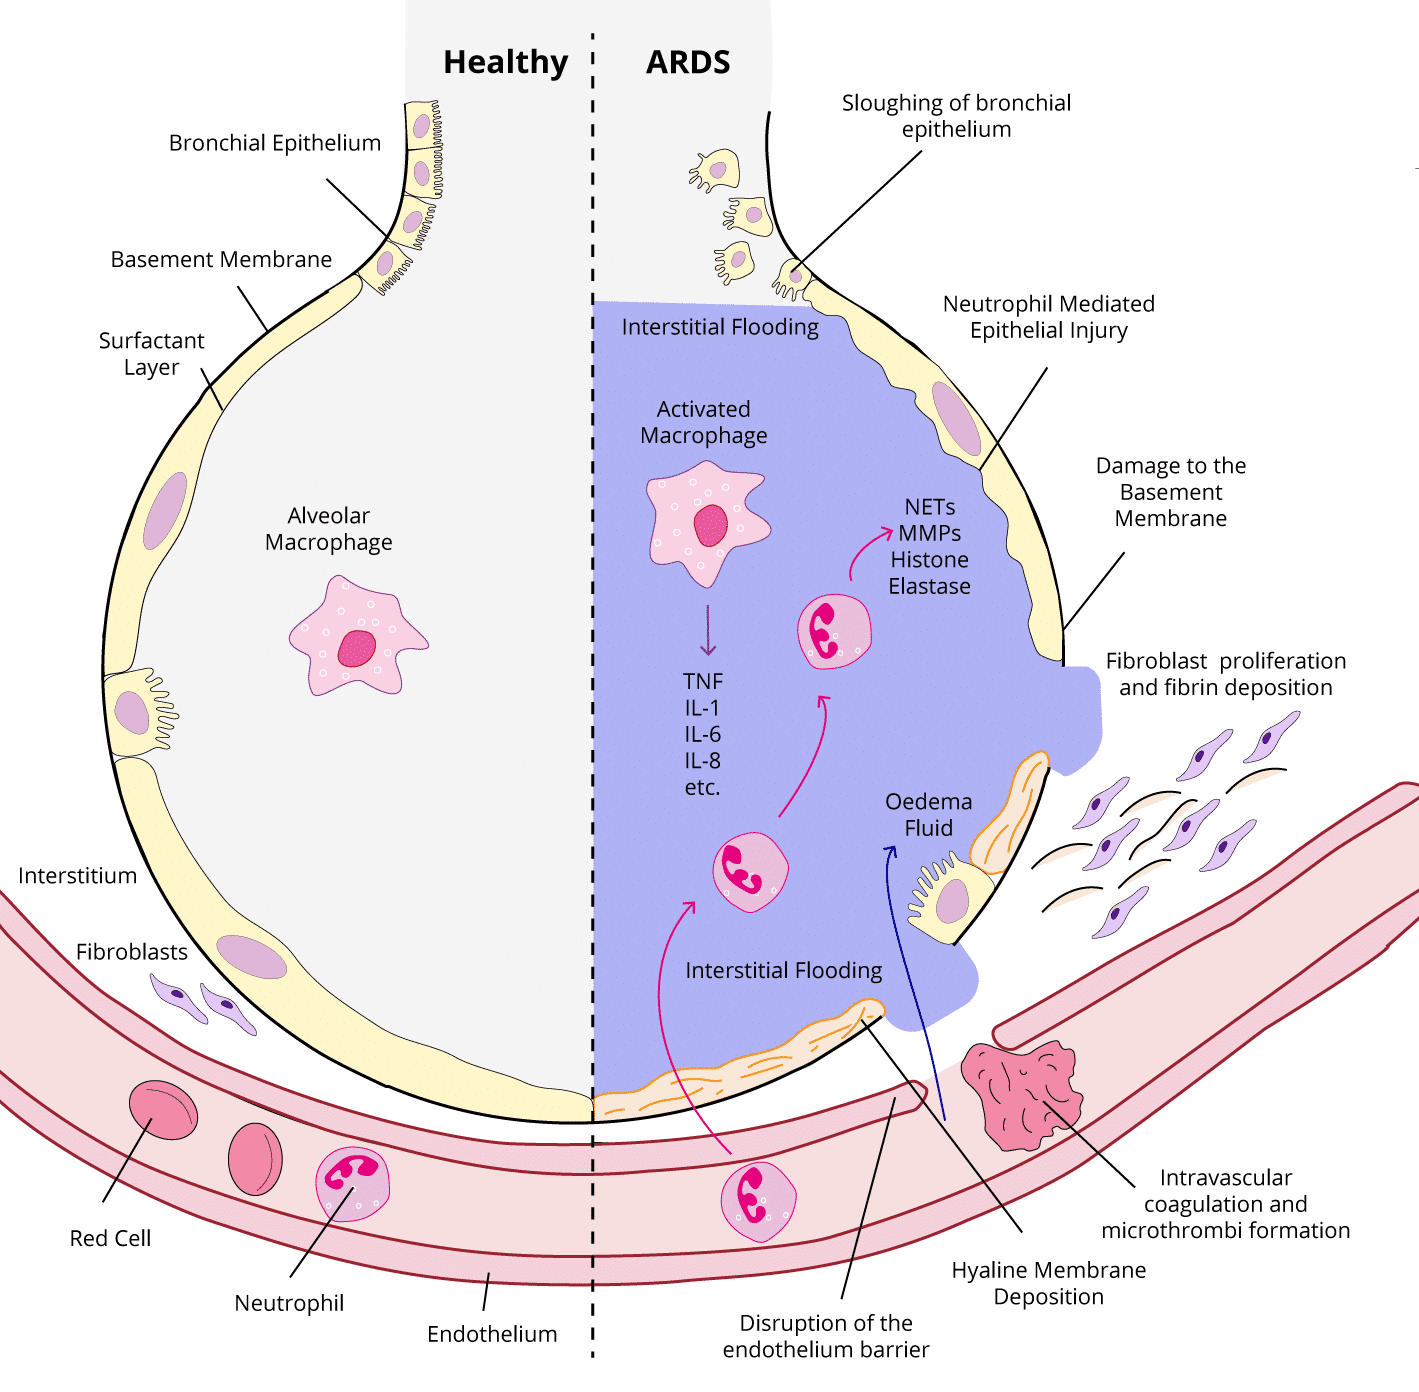 Pathophysiological mechanisms involved in ARDS